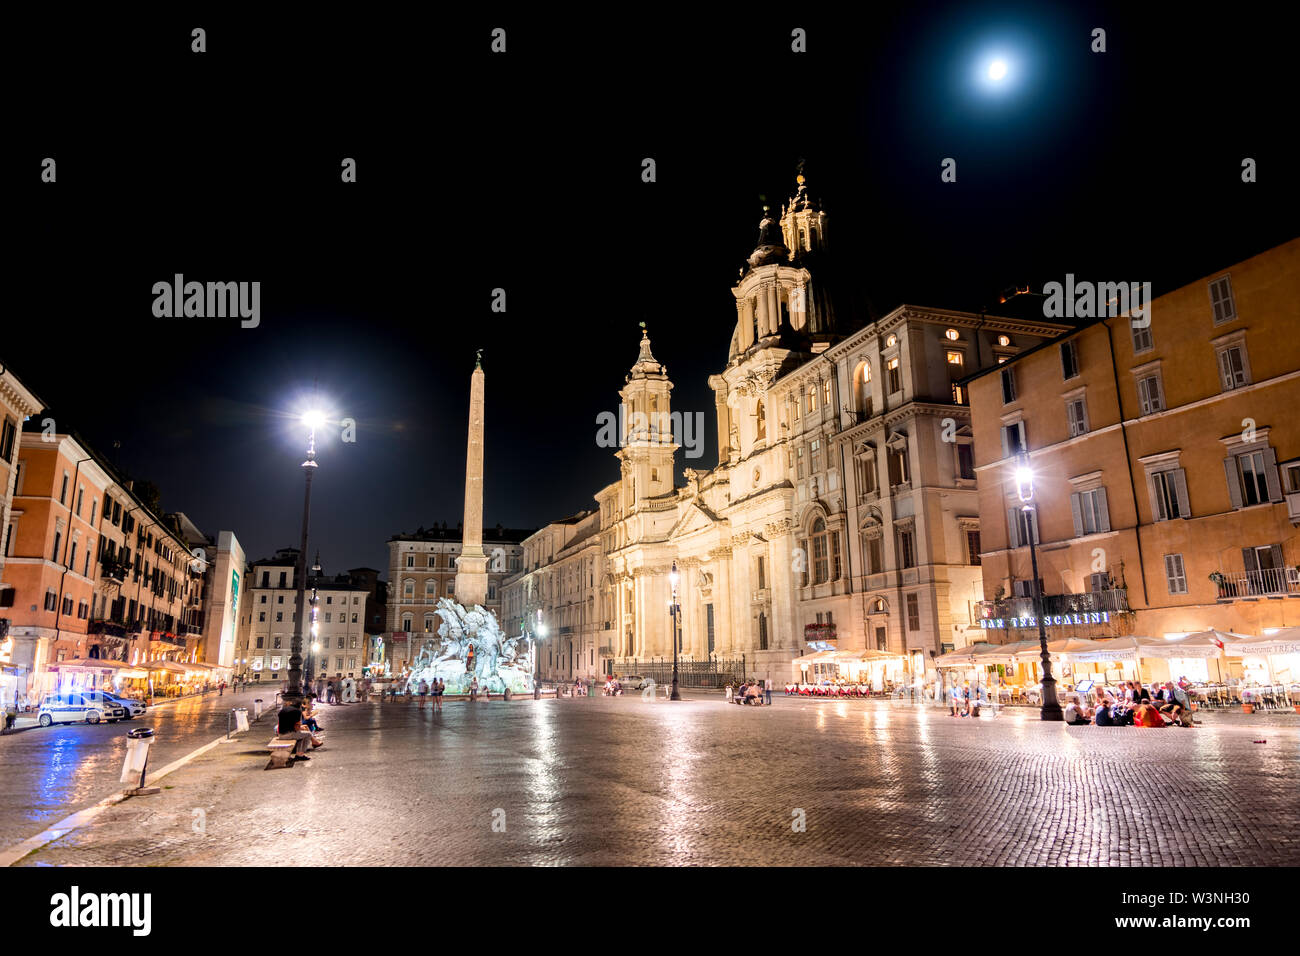 Piazza Navona at night under full moon - Rome, Italy Stock Photo - Alamy